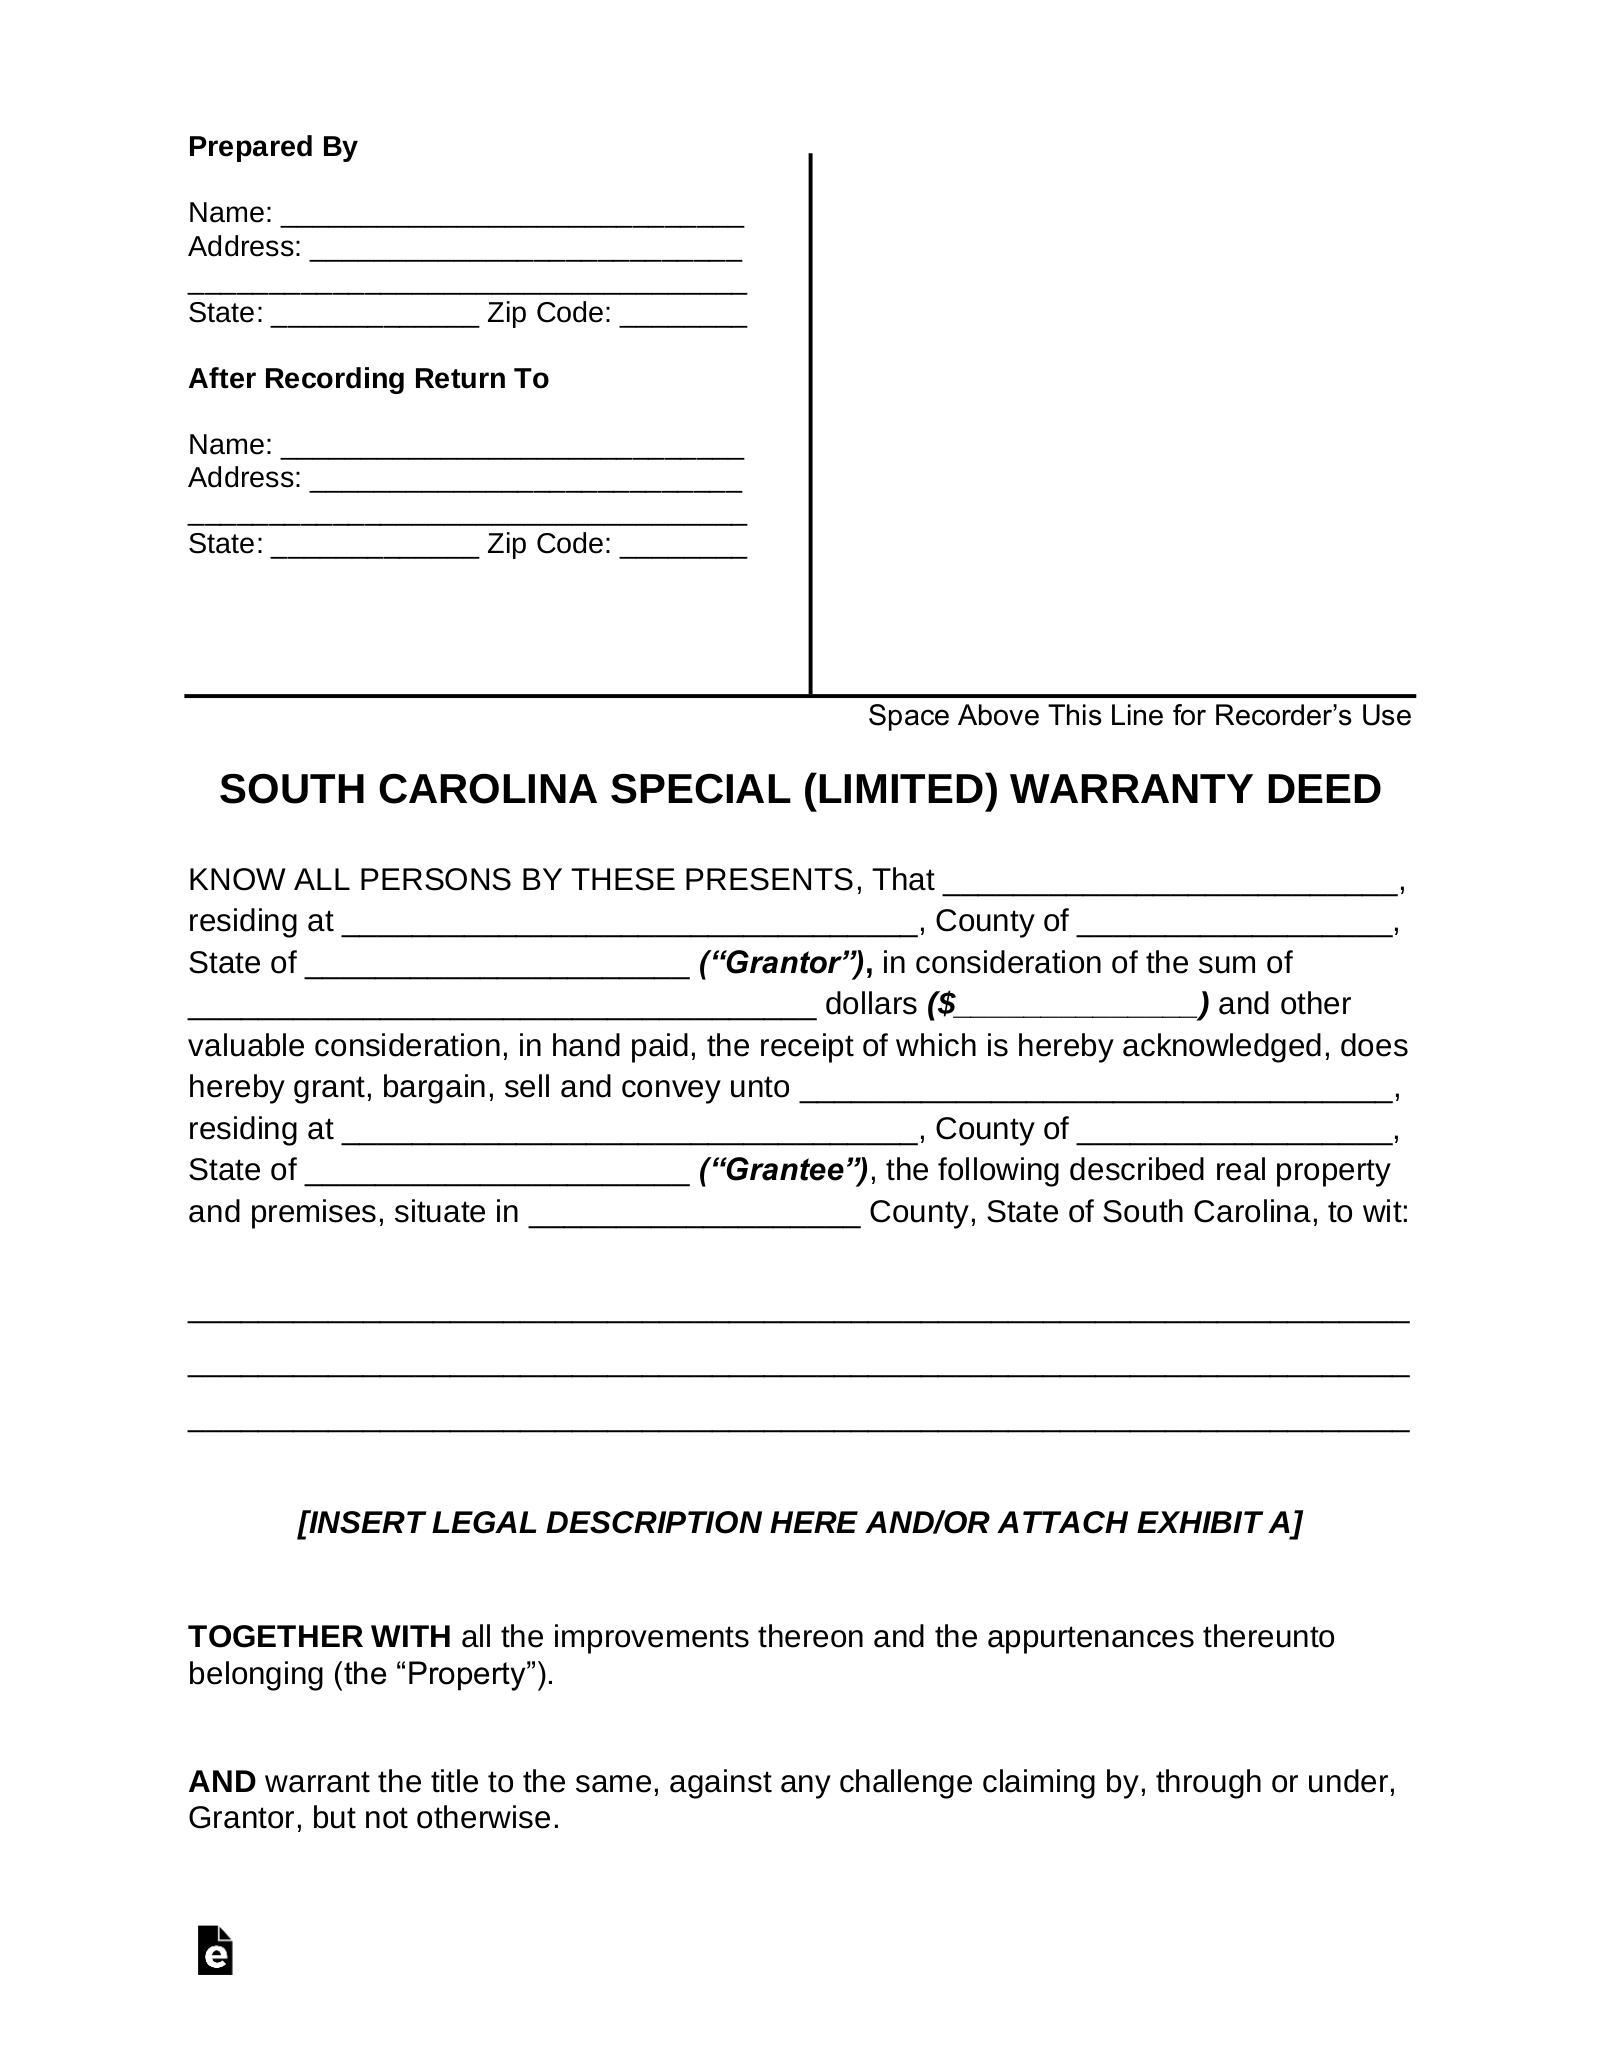 South Carolina Special Warranty Deed Form